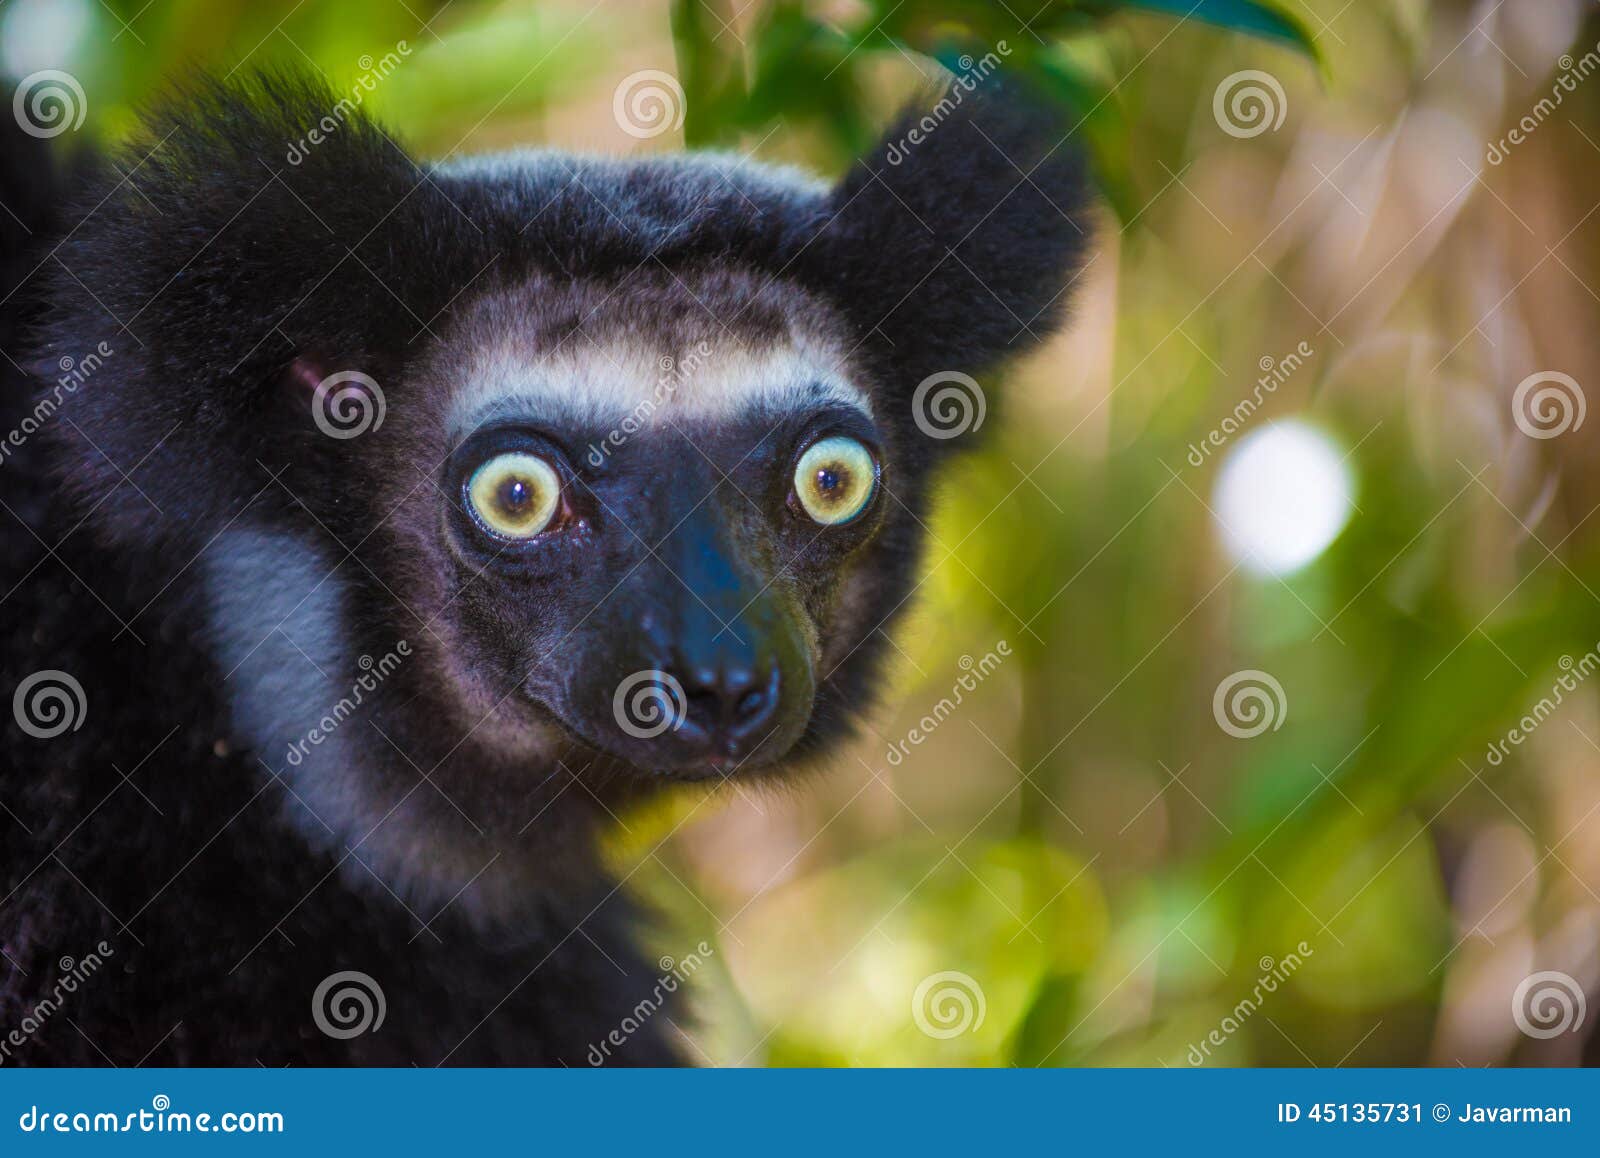 indri, the largest lemur of madagascar